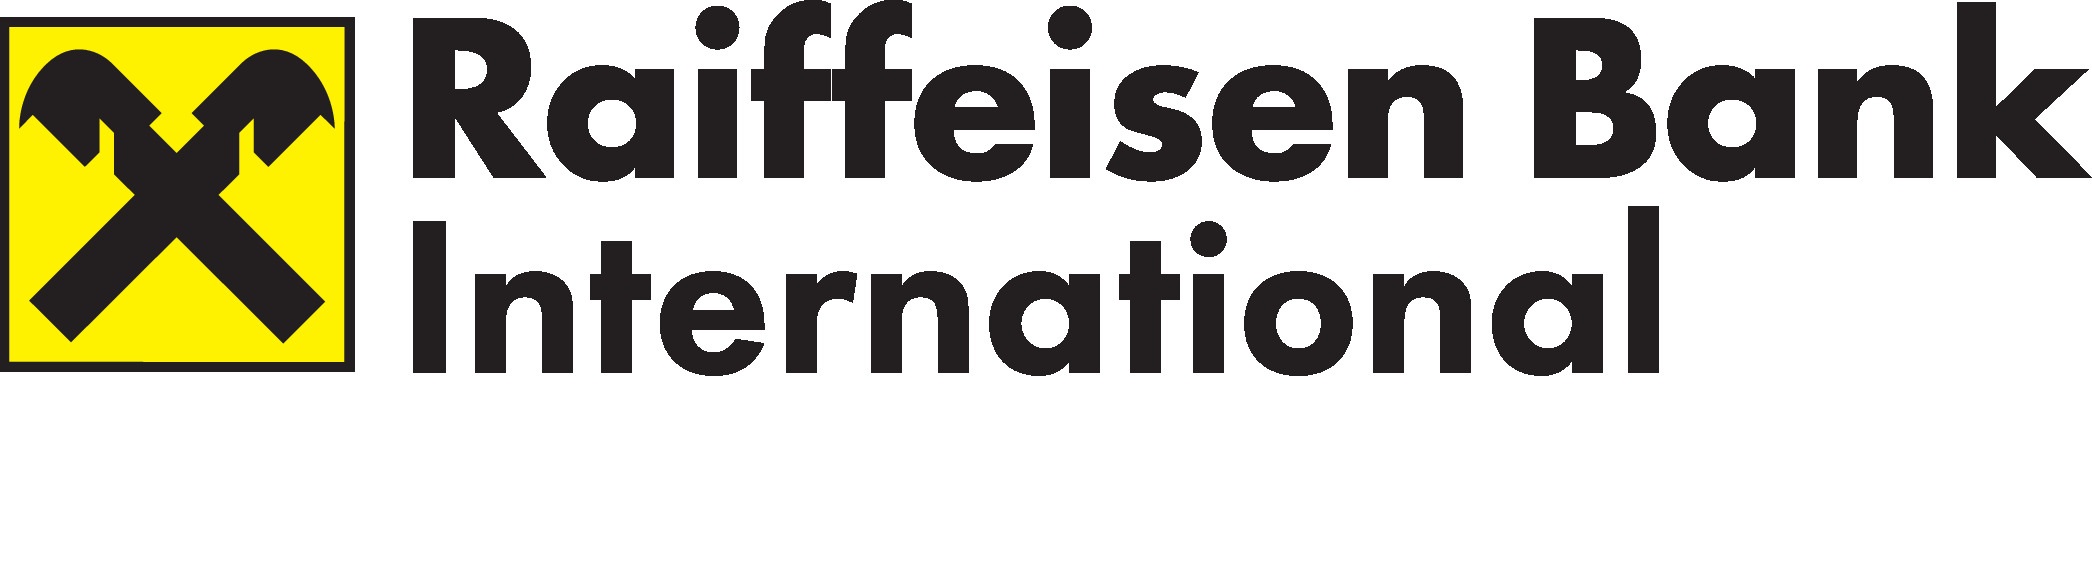 Raiffeisen银行国际标志